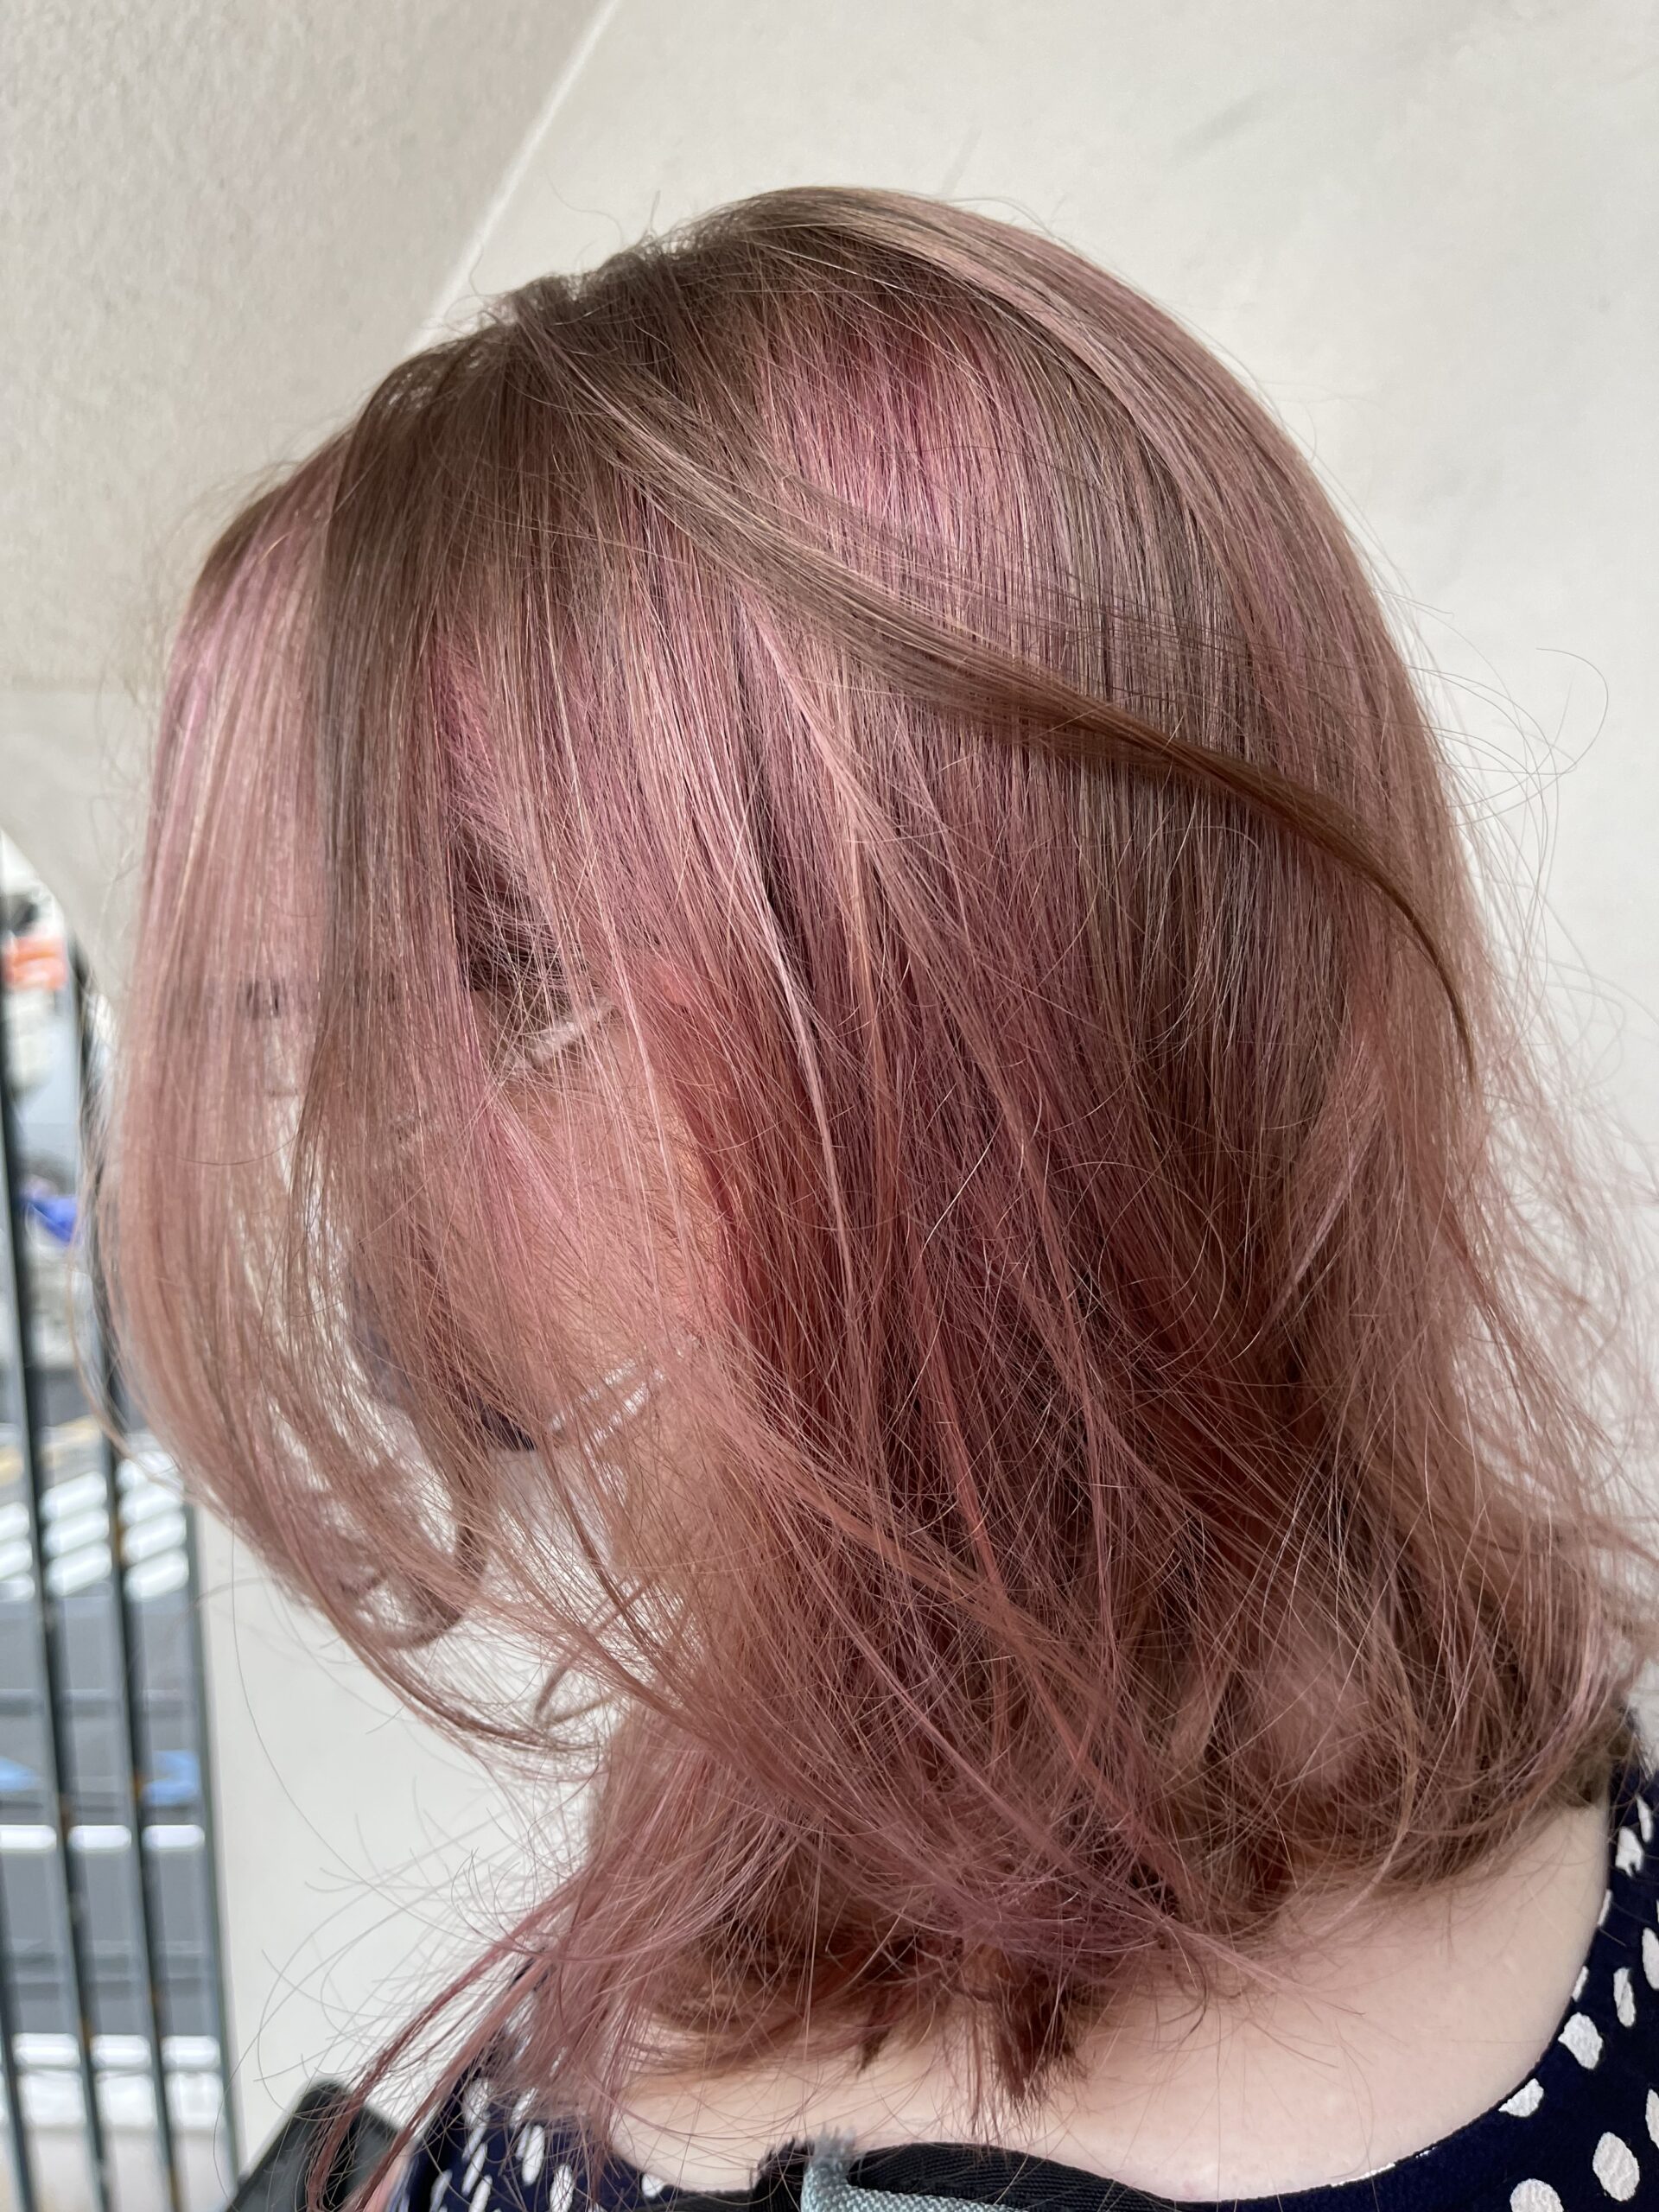 redpurple hair colour